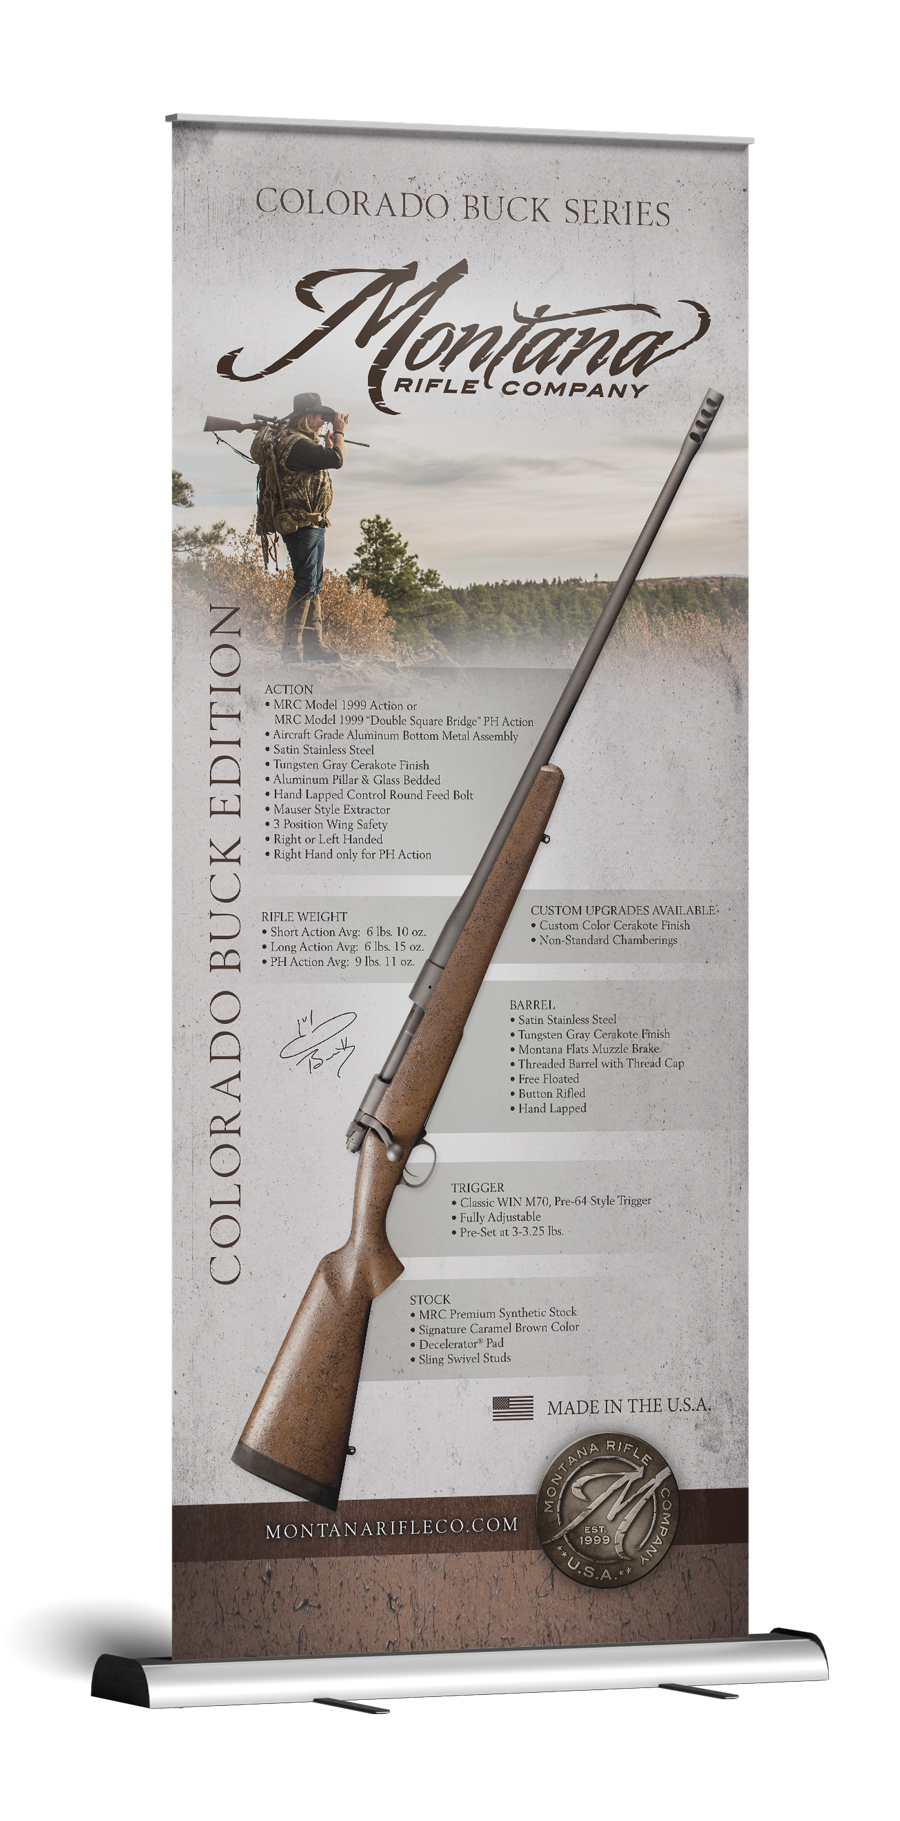 Montana Rifle Company - Colorado Buck Edition Rifle - Pop Up Banner Design & Print Production